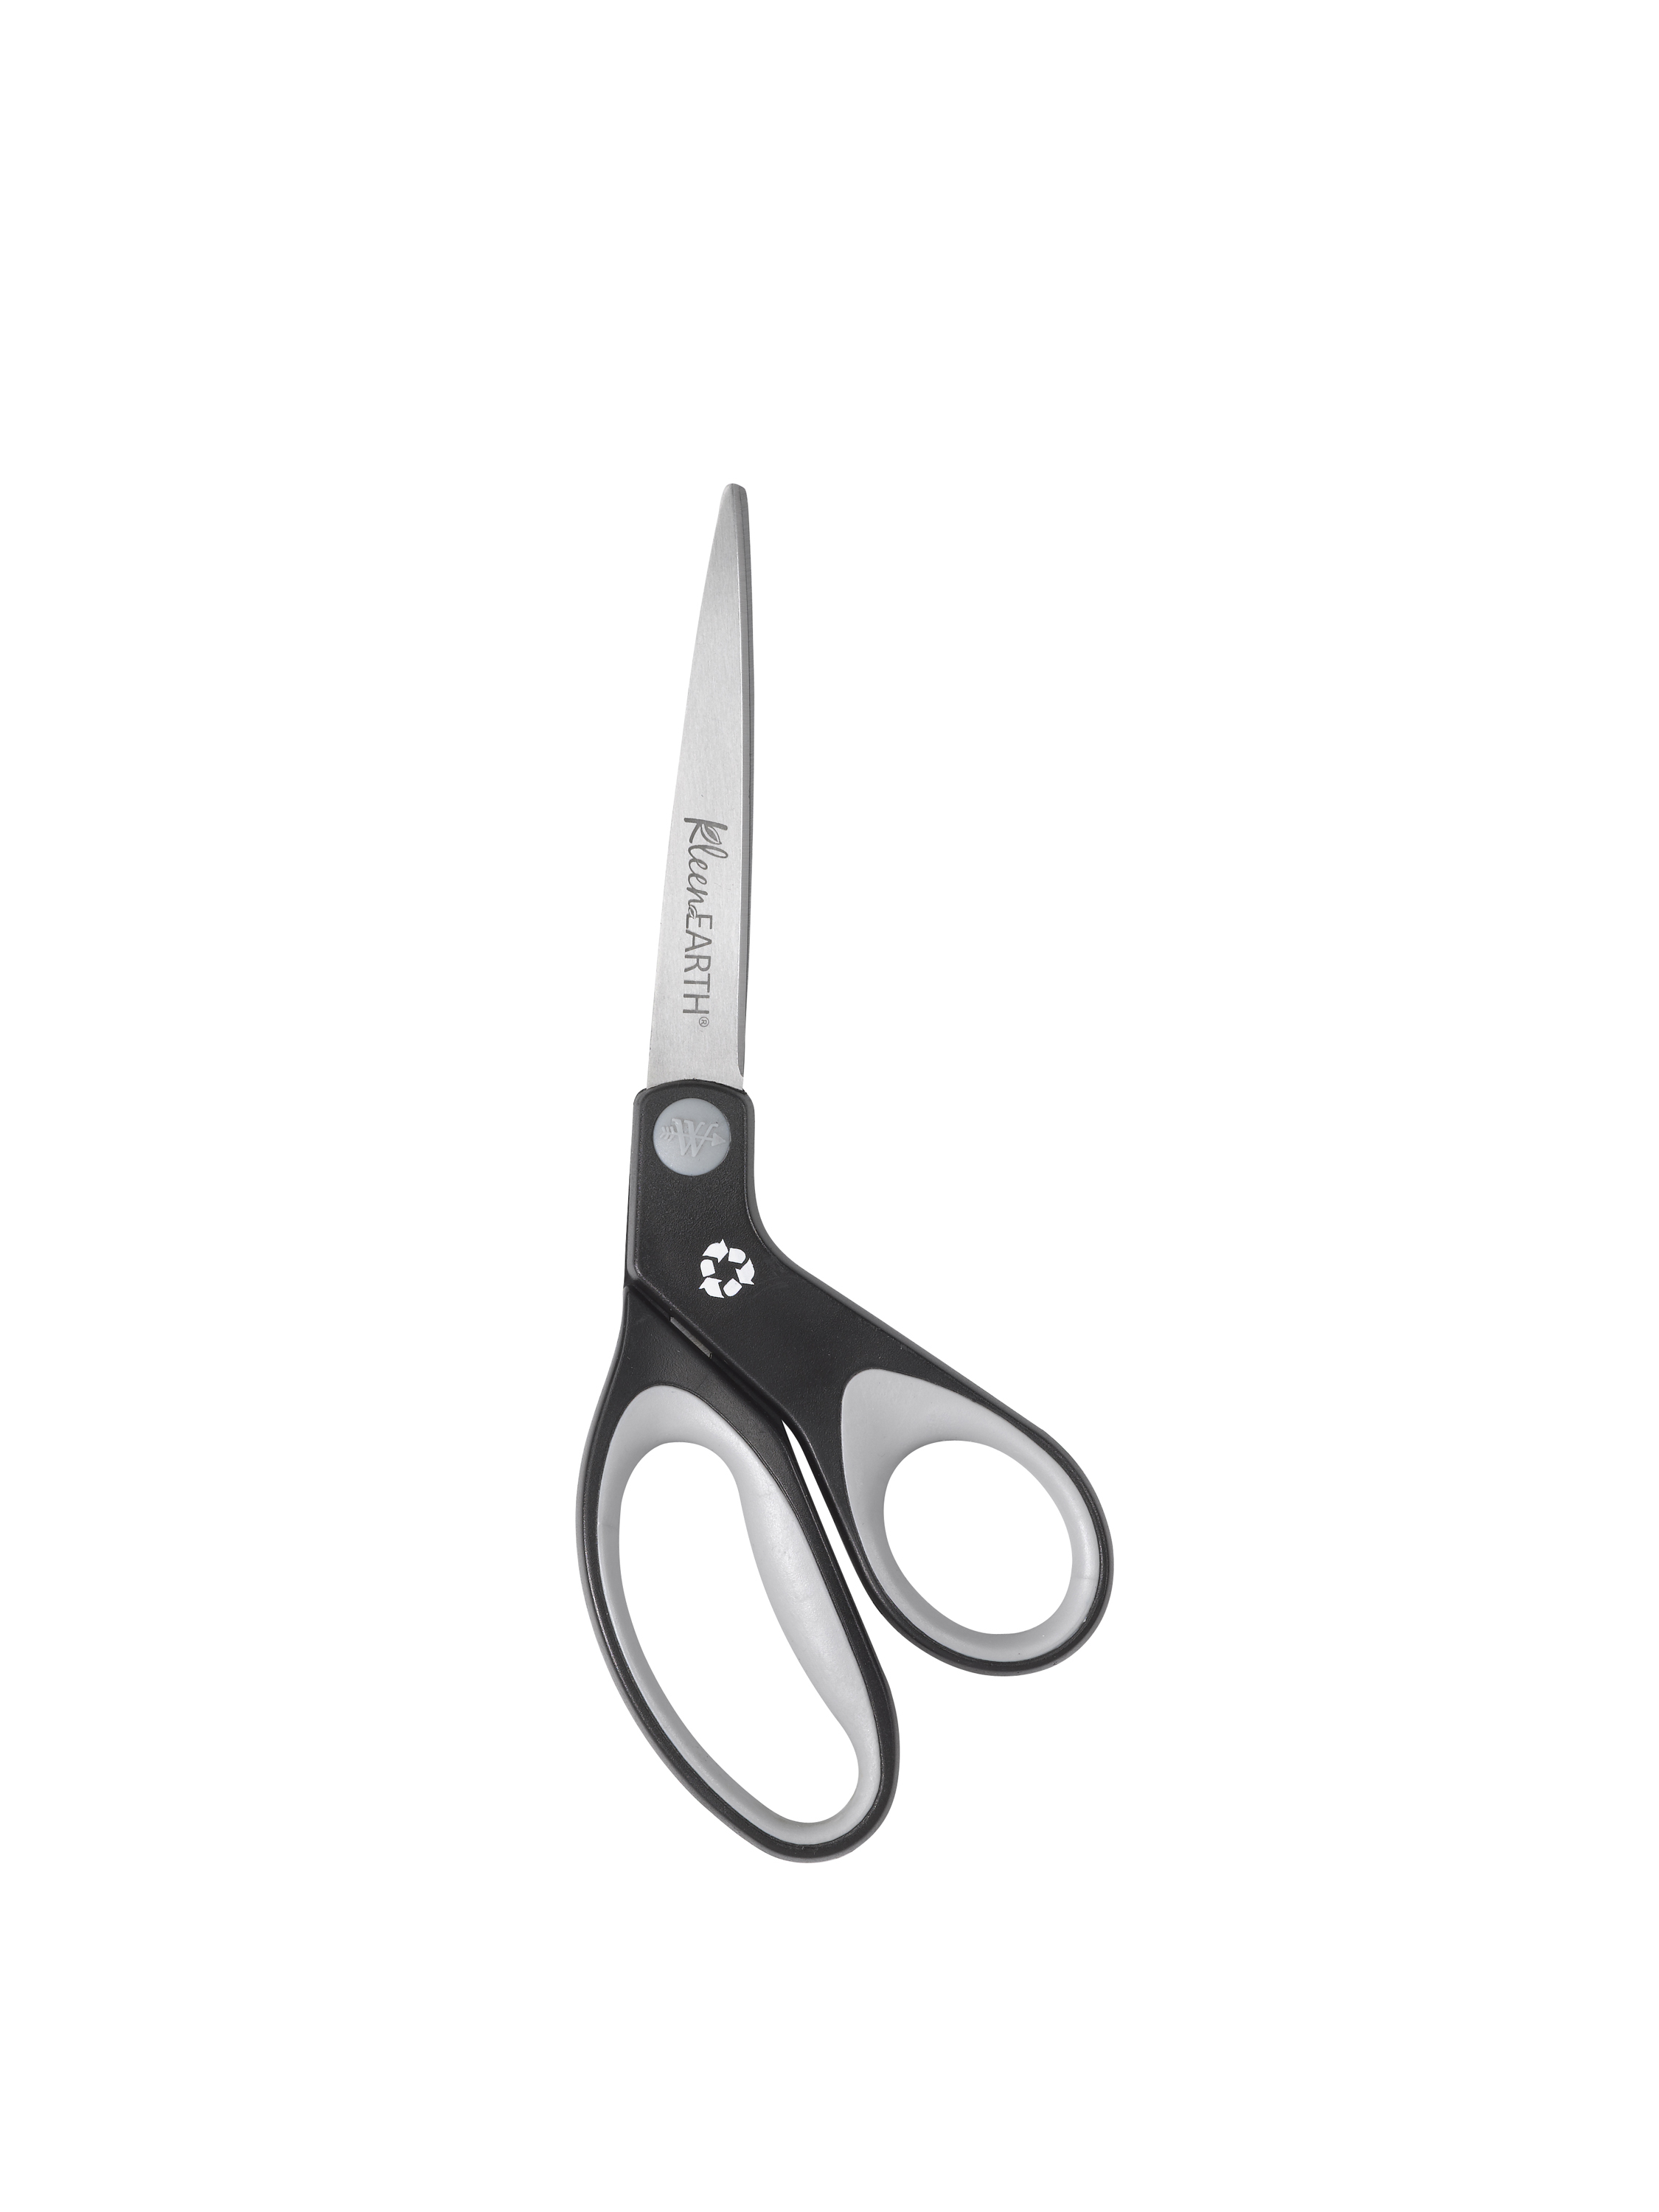 Westcott 8-Inch KleenEarth Soft Handle Bent Scissors, Black/Gray (15589)